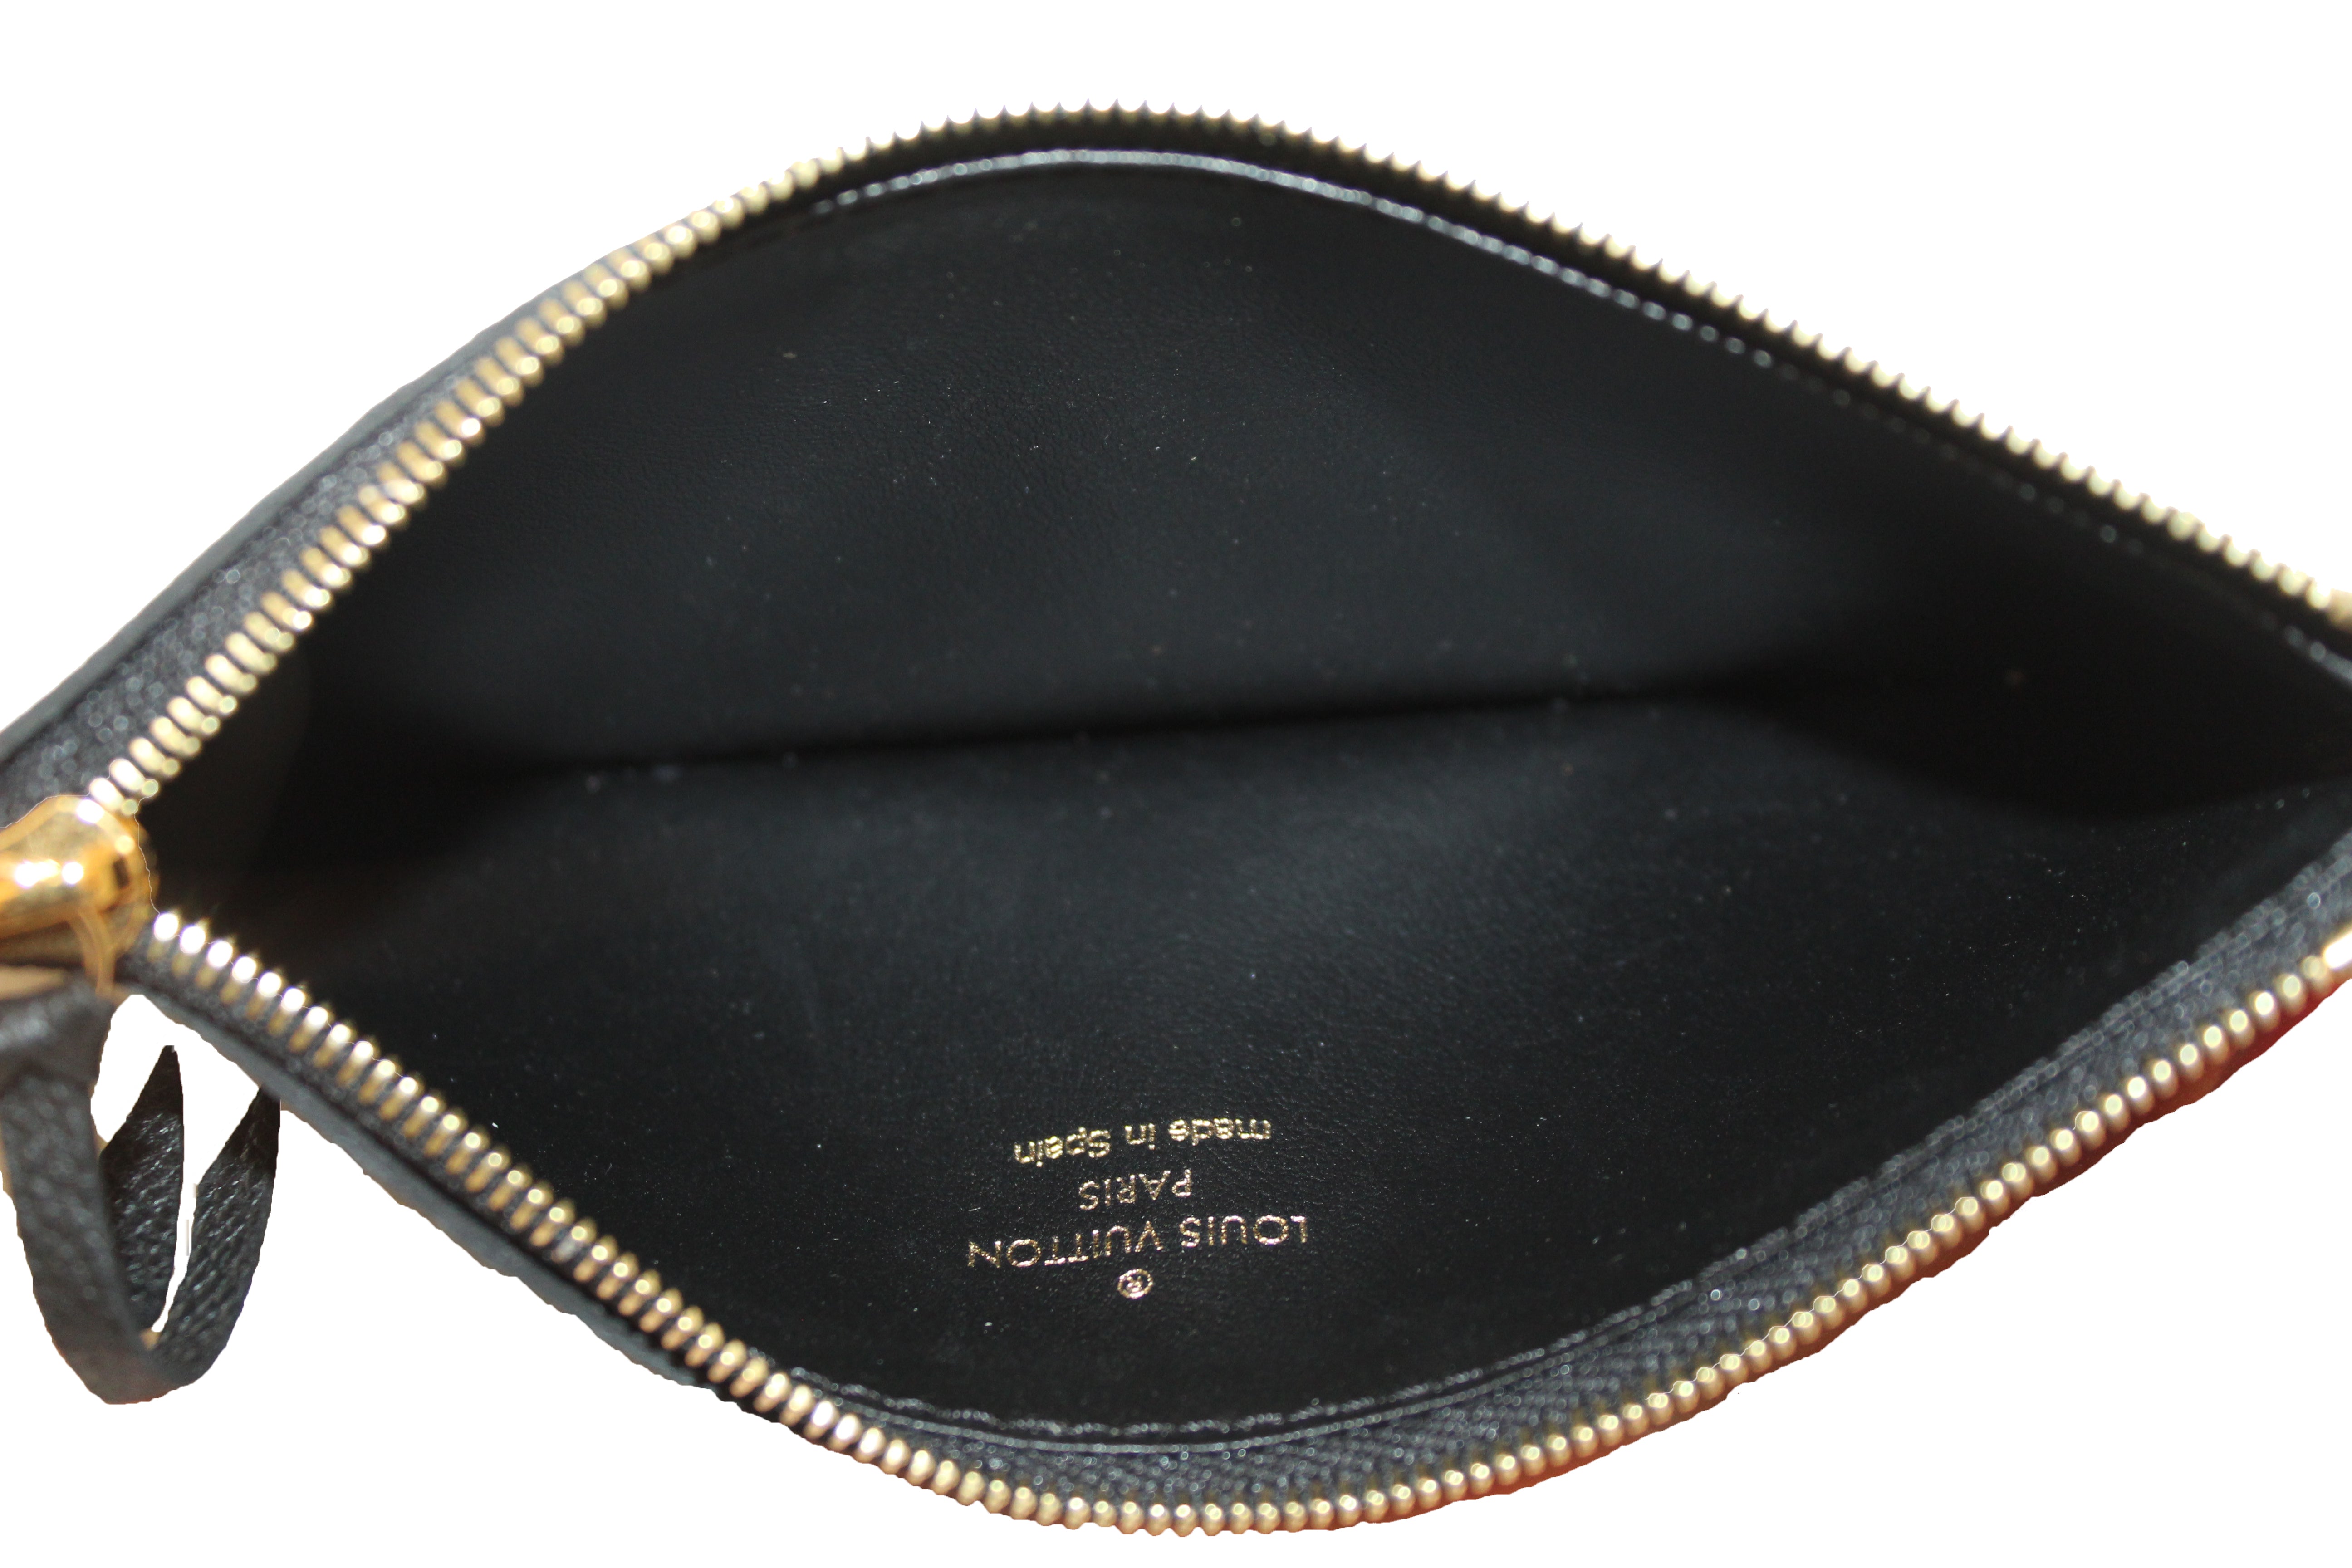 Louis Vuitton Josephine Empreinte Leather Wallet Black